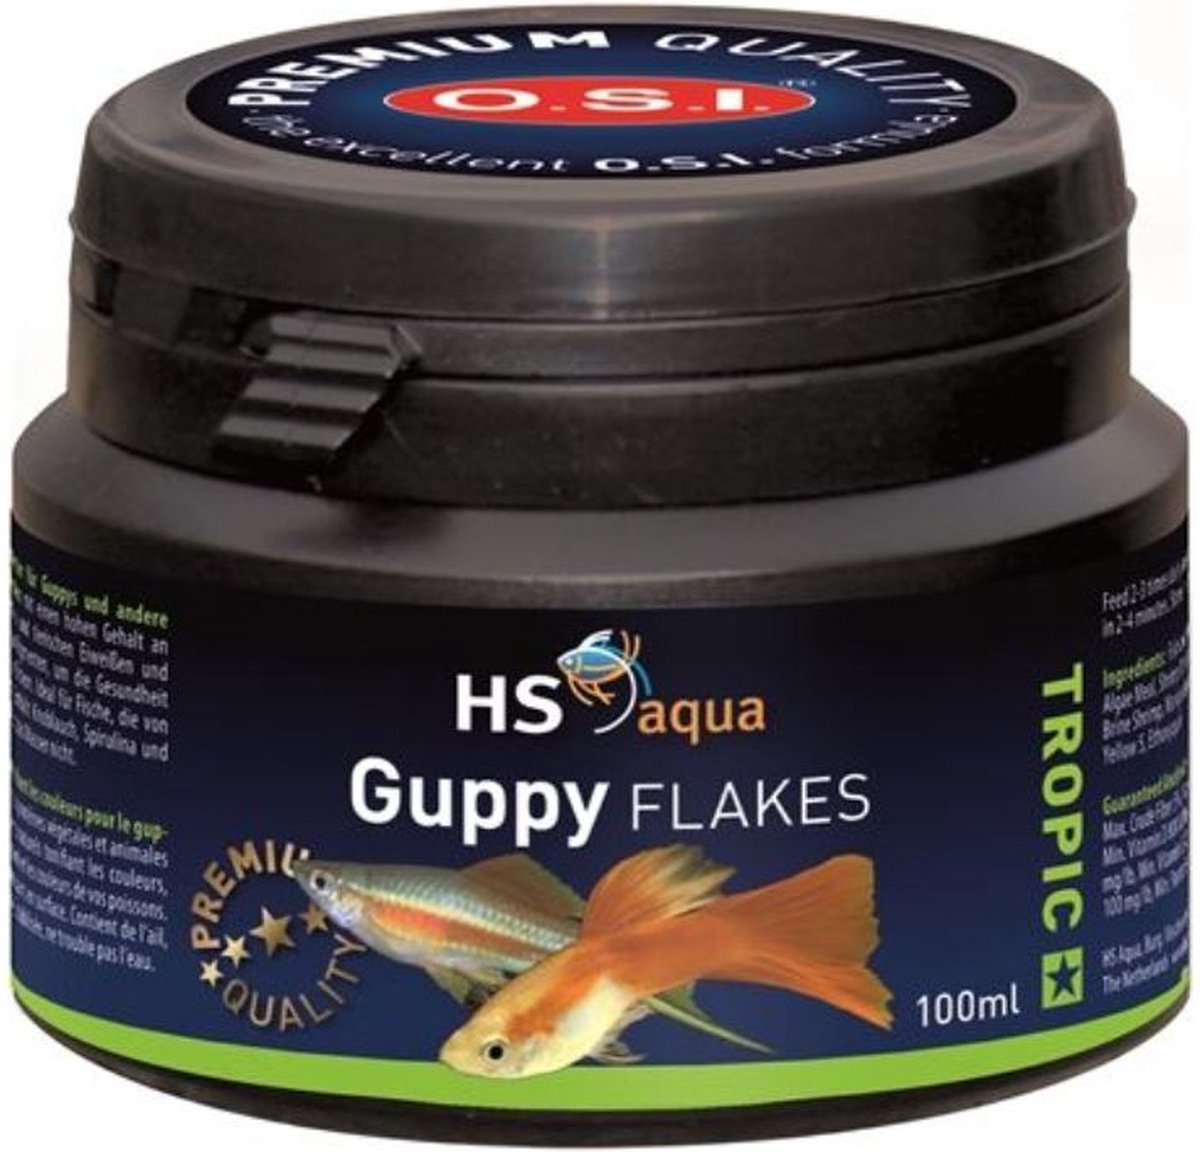 HS aqua - Guppy flakes voor guppies - 100 ml/18g